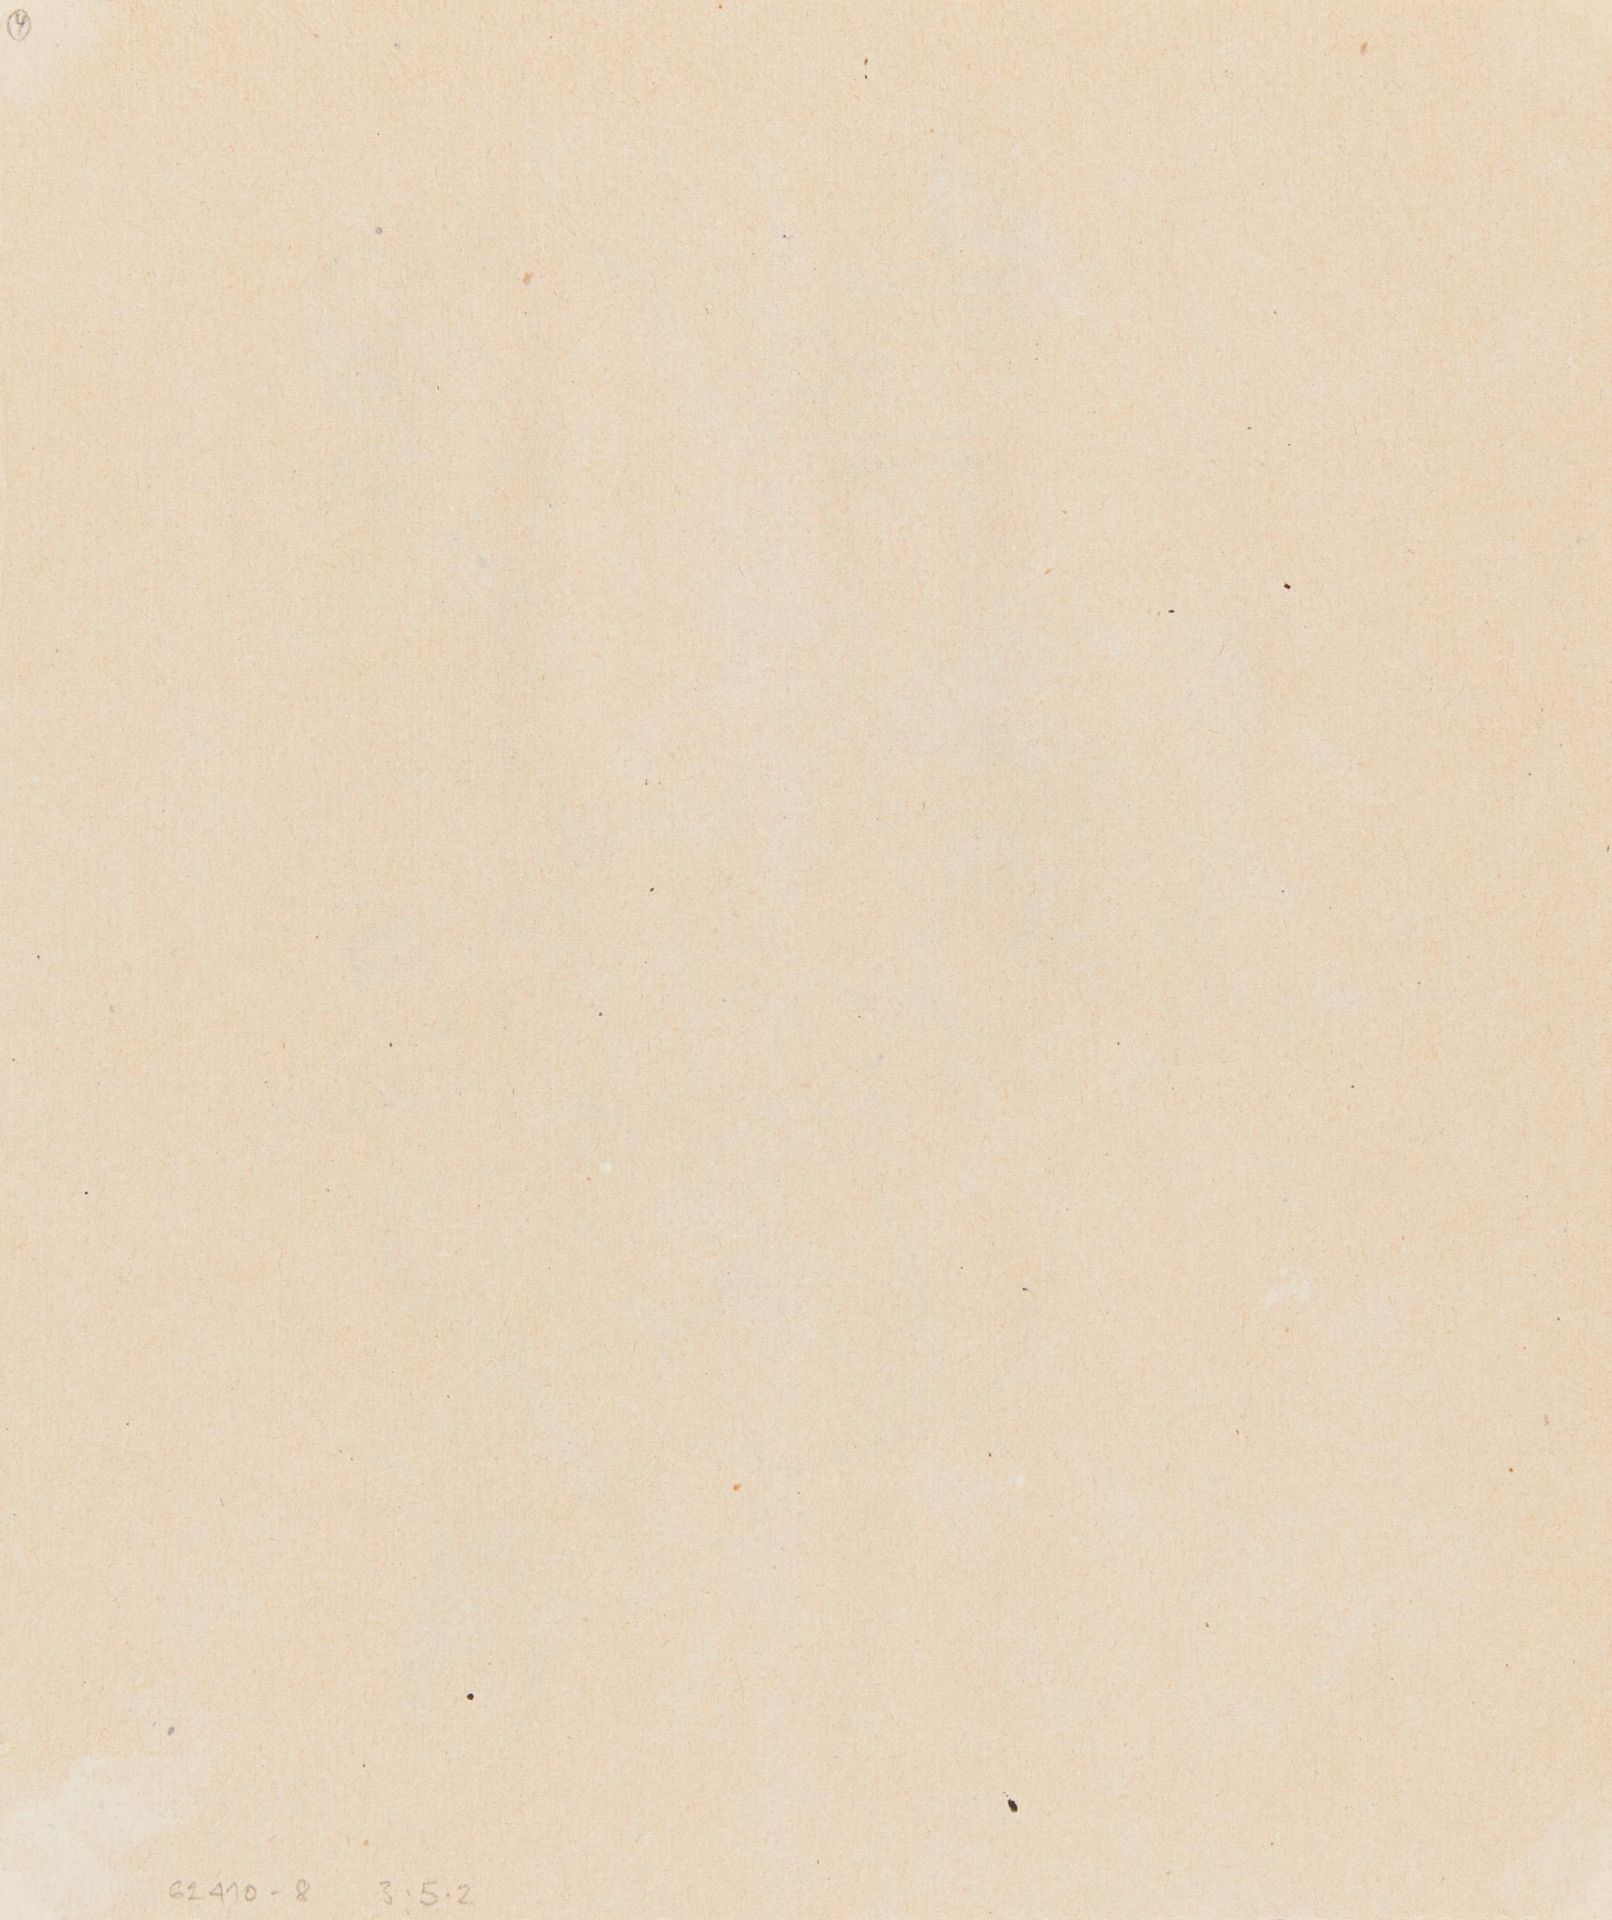 Grosz, George Berlin 1891 - 1959 Meine Kegelbahn. 1920/21. Kolorierte Lithografie auf Japan. 29 x - Image 2 of 2